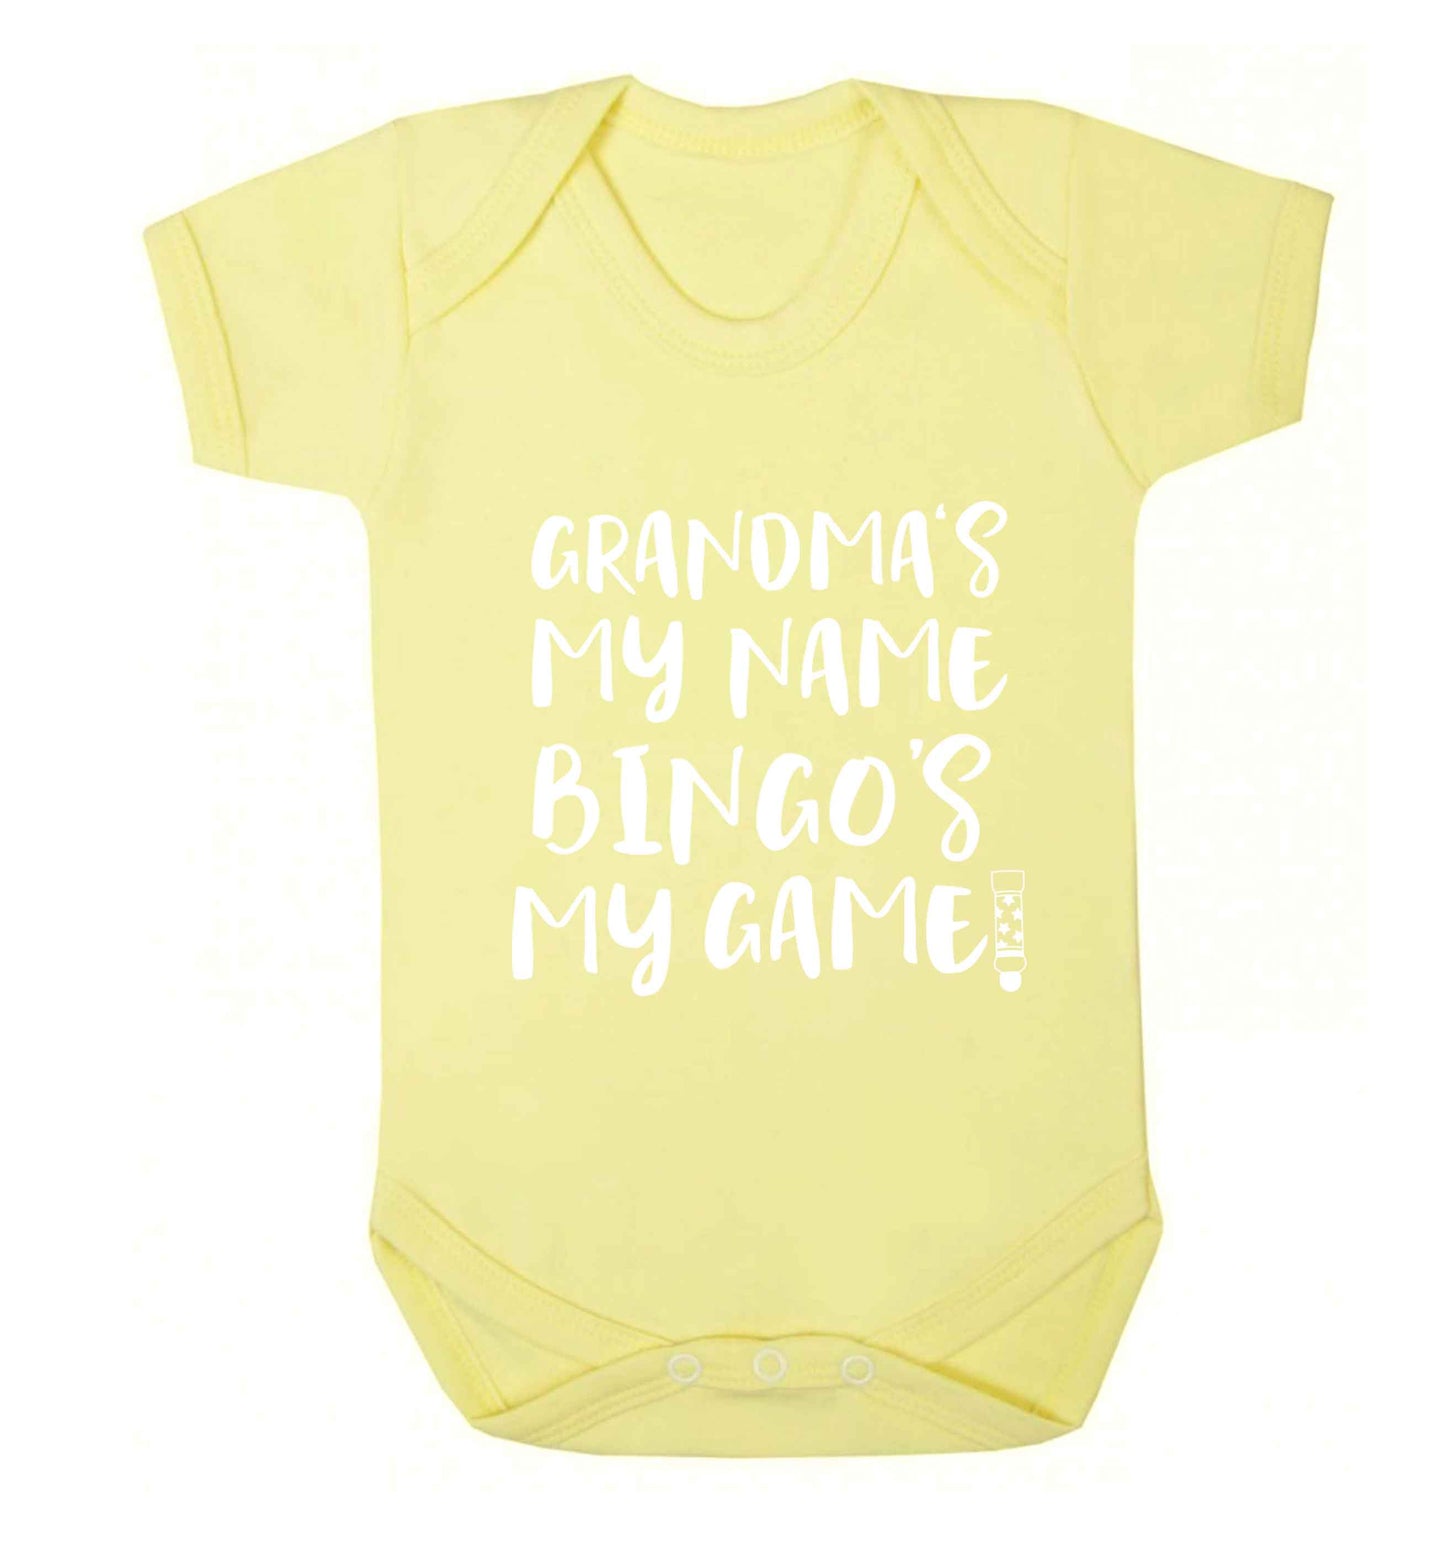 Grandma's my name bingo's my game! Baby Vest pale yellow 18-24 months